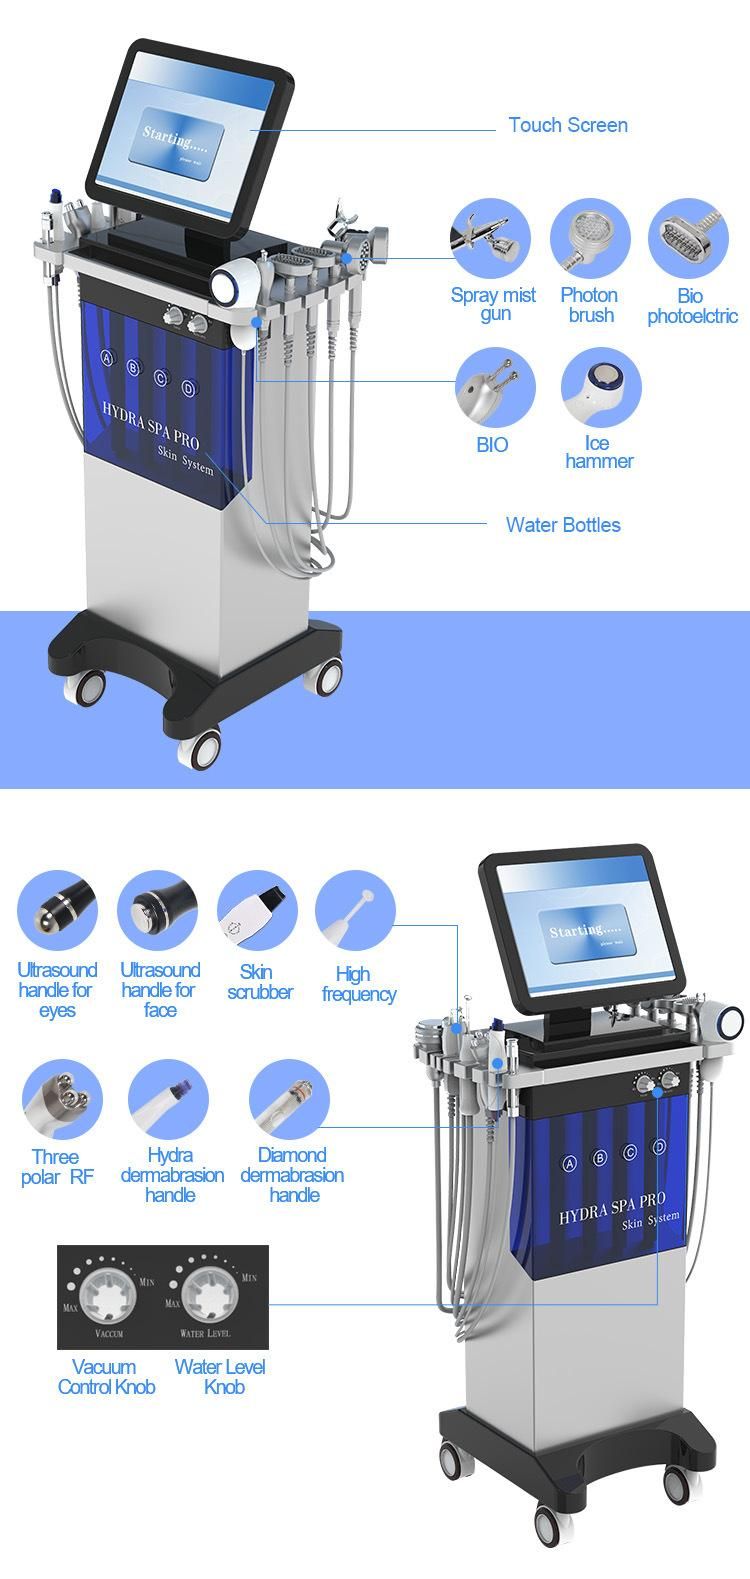 Latest Technology Hydra Dermabrtasion Oxygen Facial Aqua Peel Jet Hydrapeel Beauty Machine Jet Peel Beauty Equipment